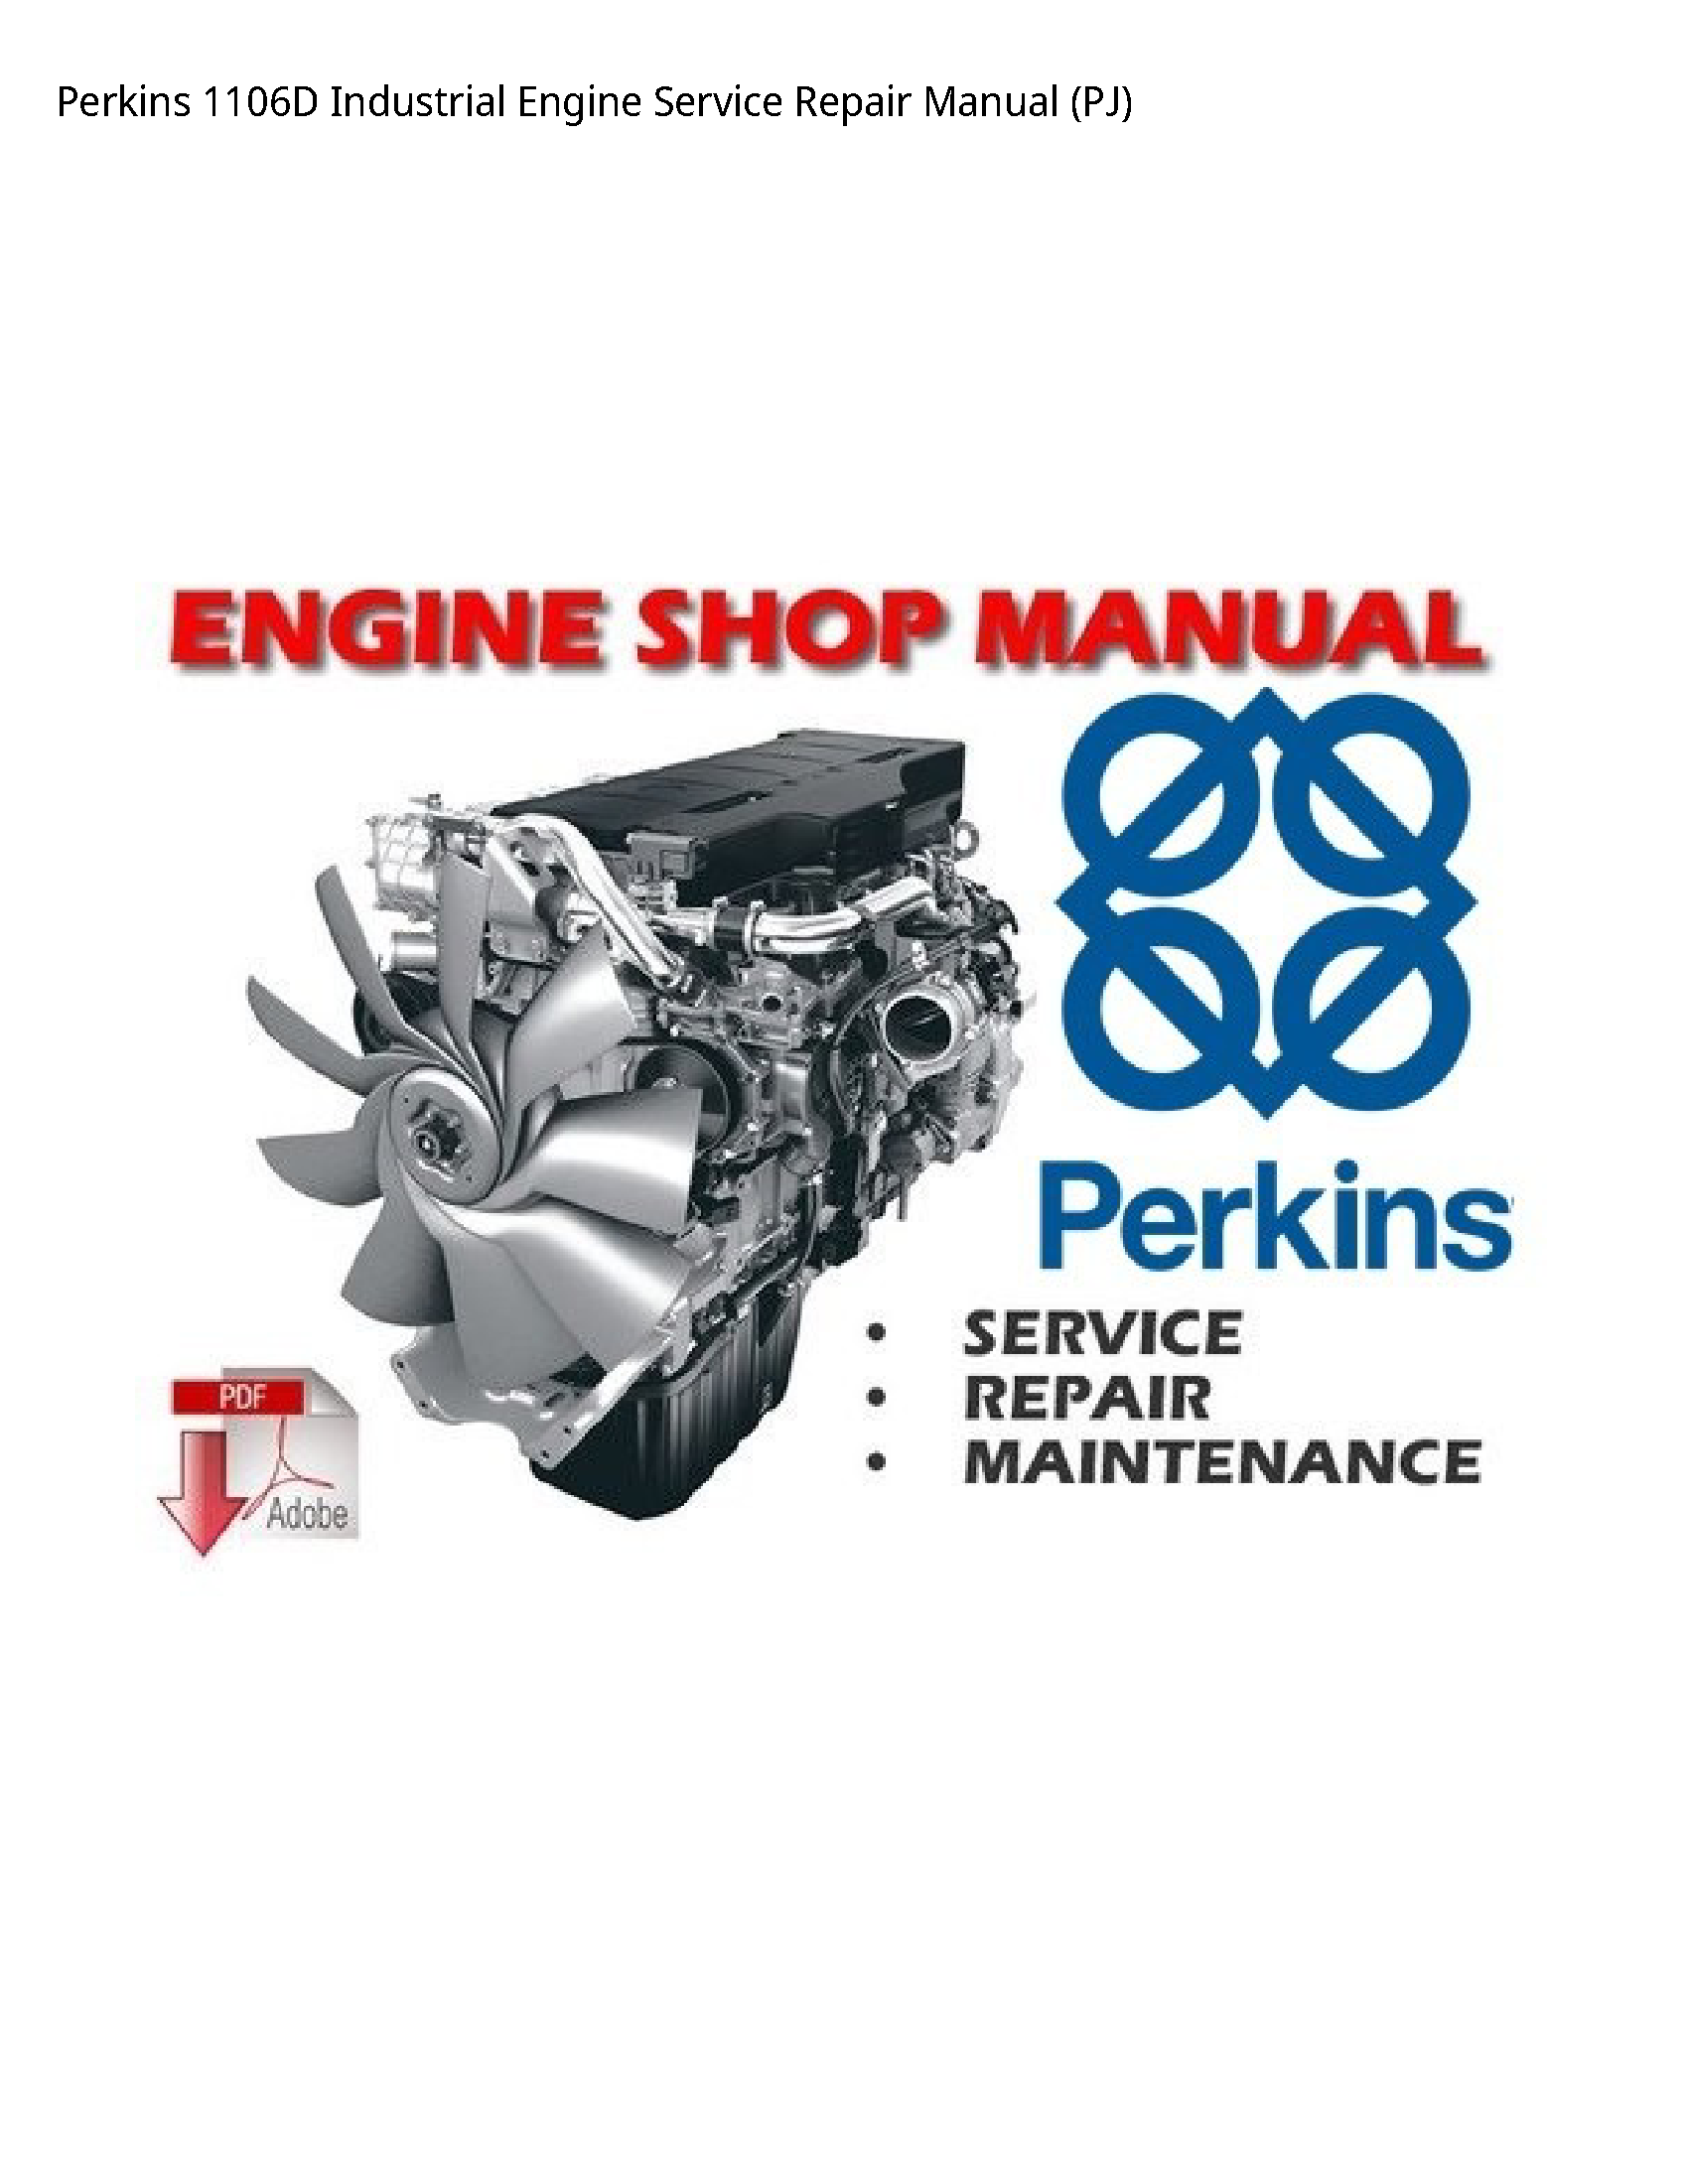 Perkins 1106D Industrial Engine manual